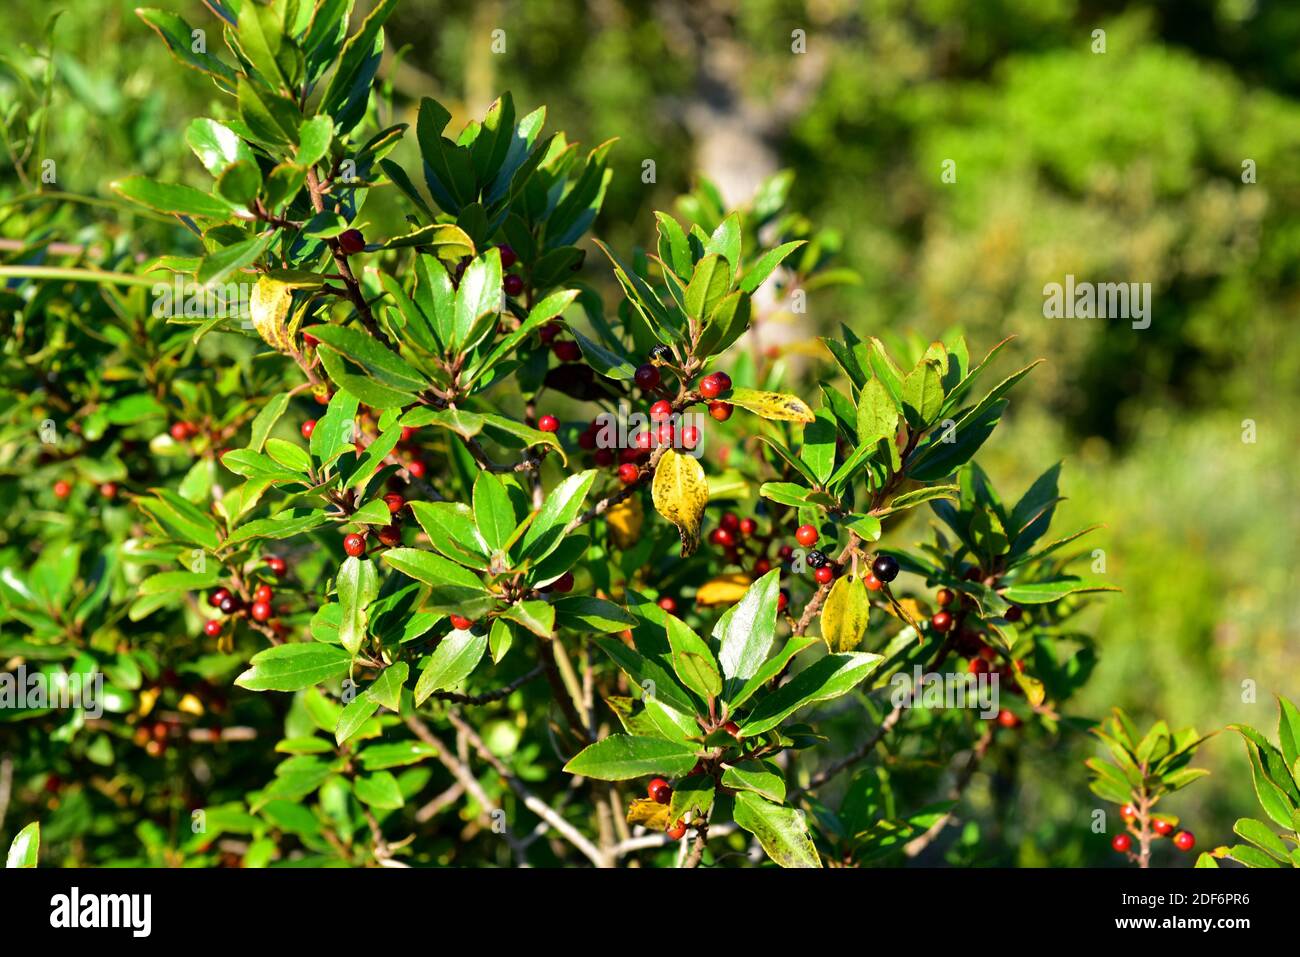 Mediterranean buckthorn (Rhamnus alaternus) is an evergreen shrub native to Mediterranean Basin. Fruits and leaves detail. This photo was taken in Stock Photo